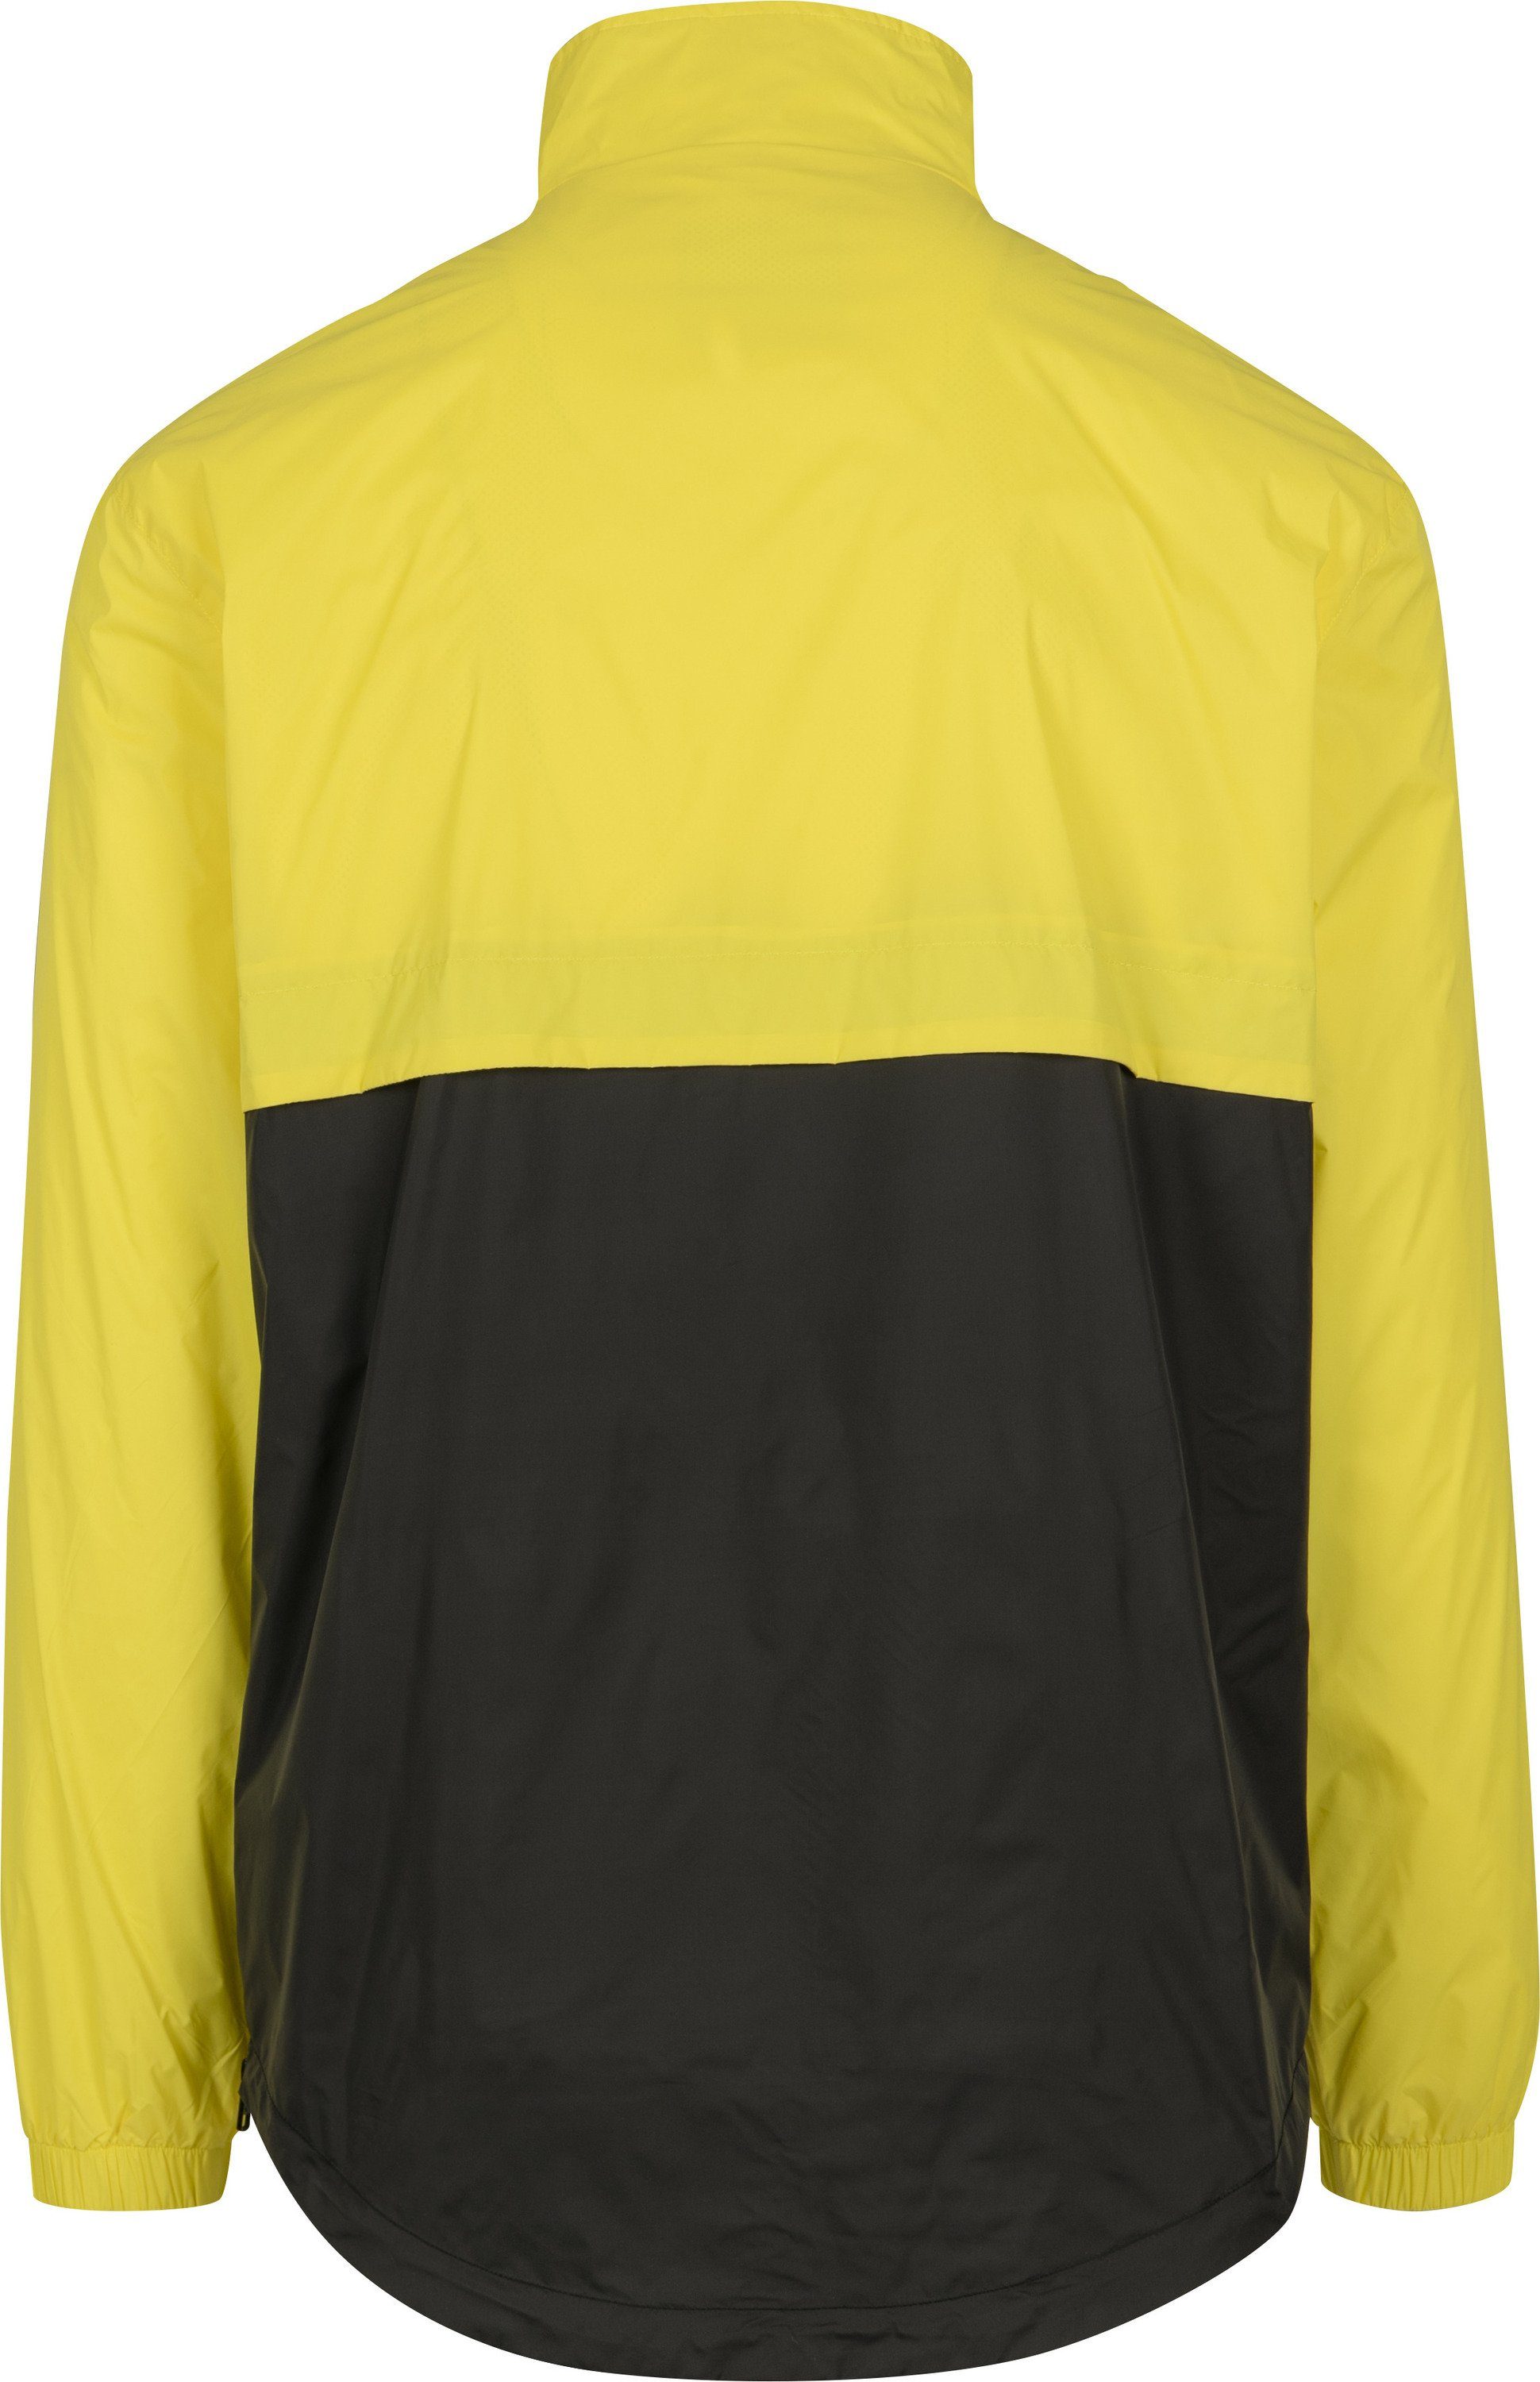 Collar CLASSICS Herren Outdoorjacke Jacket (1-St) brightyellow/black Stand Pull Over Up URBAN